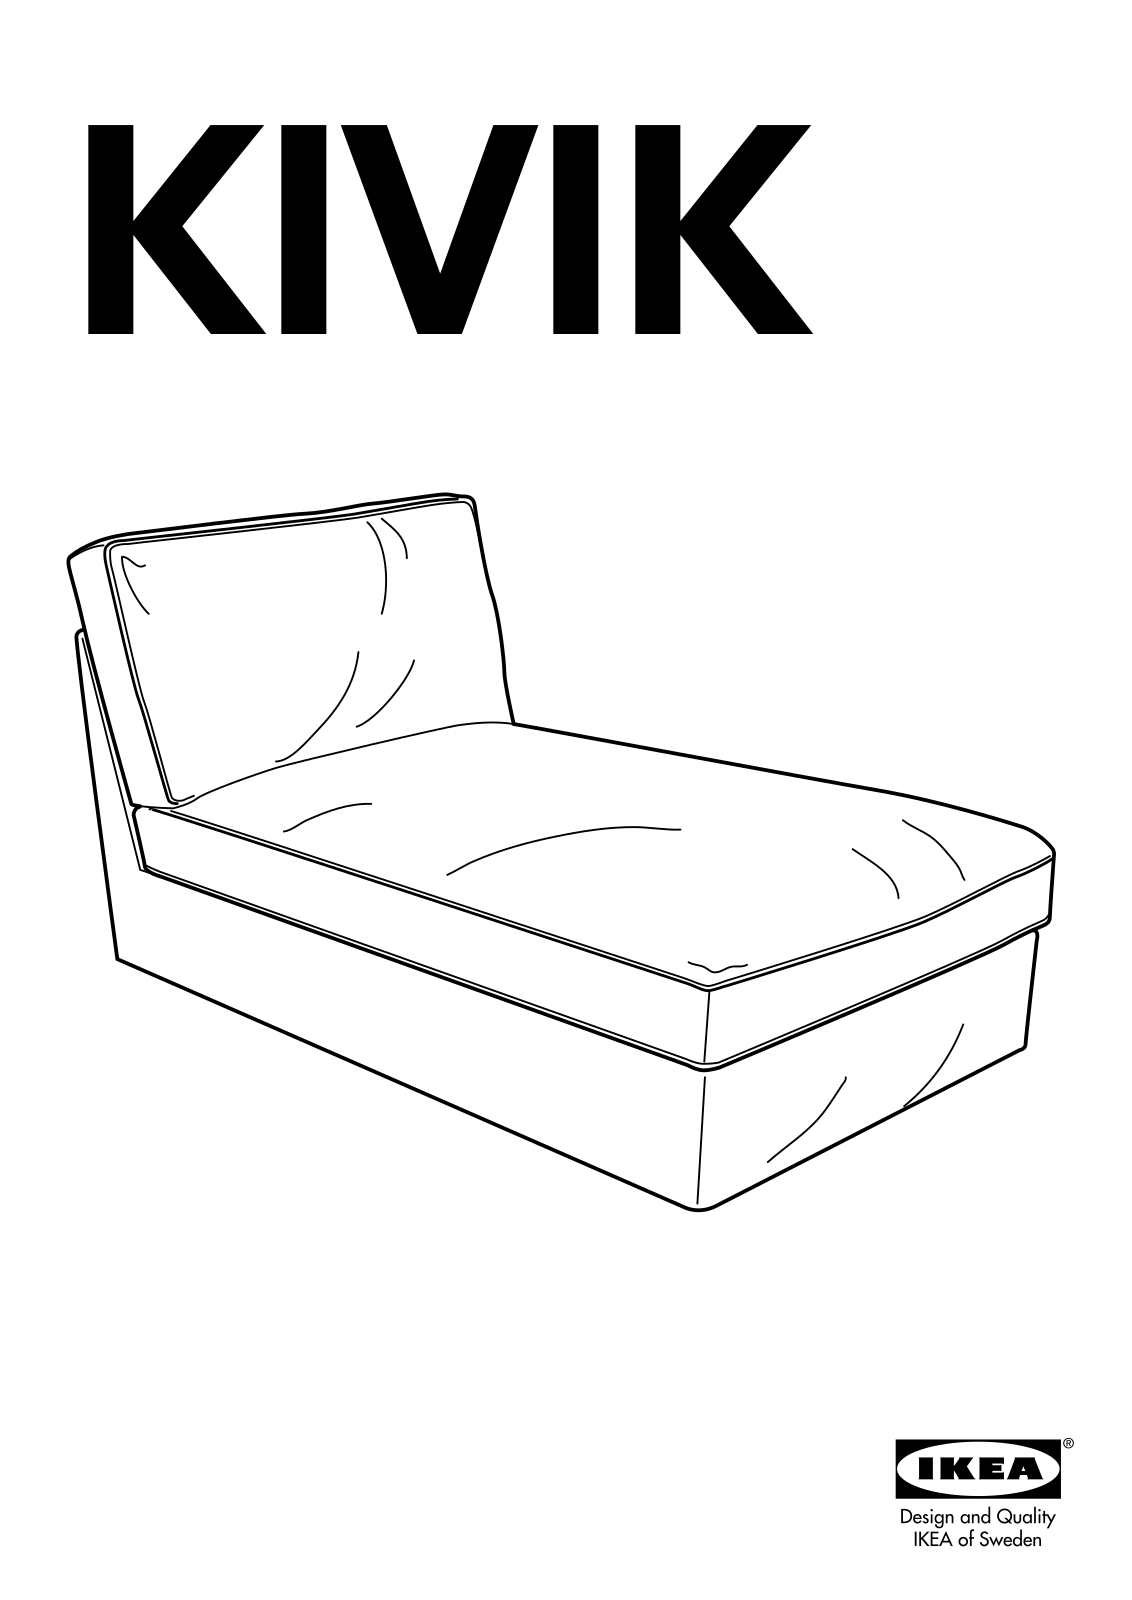 IKEA KIVIK CHAISE User Manual